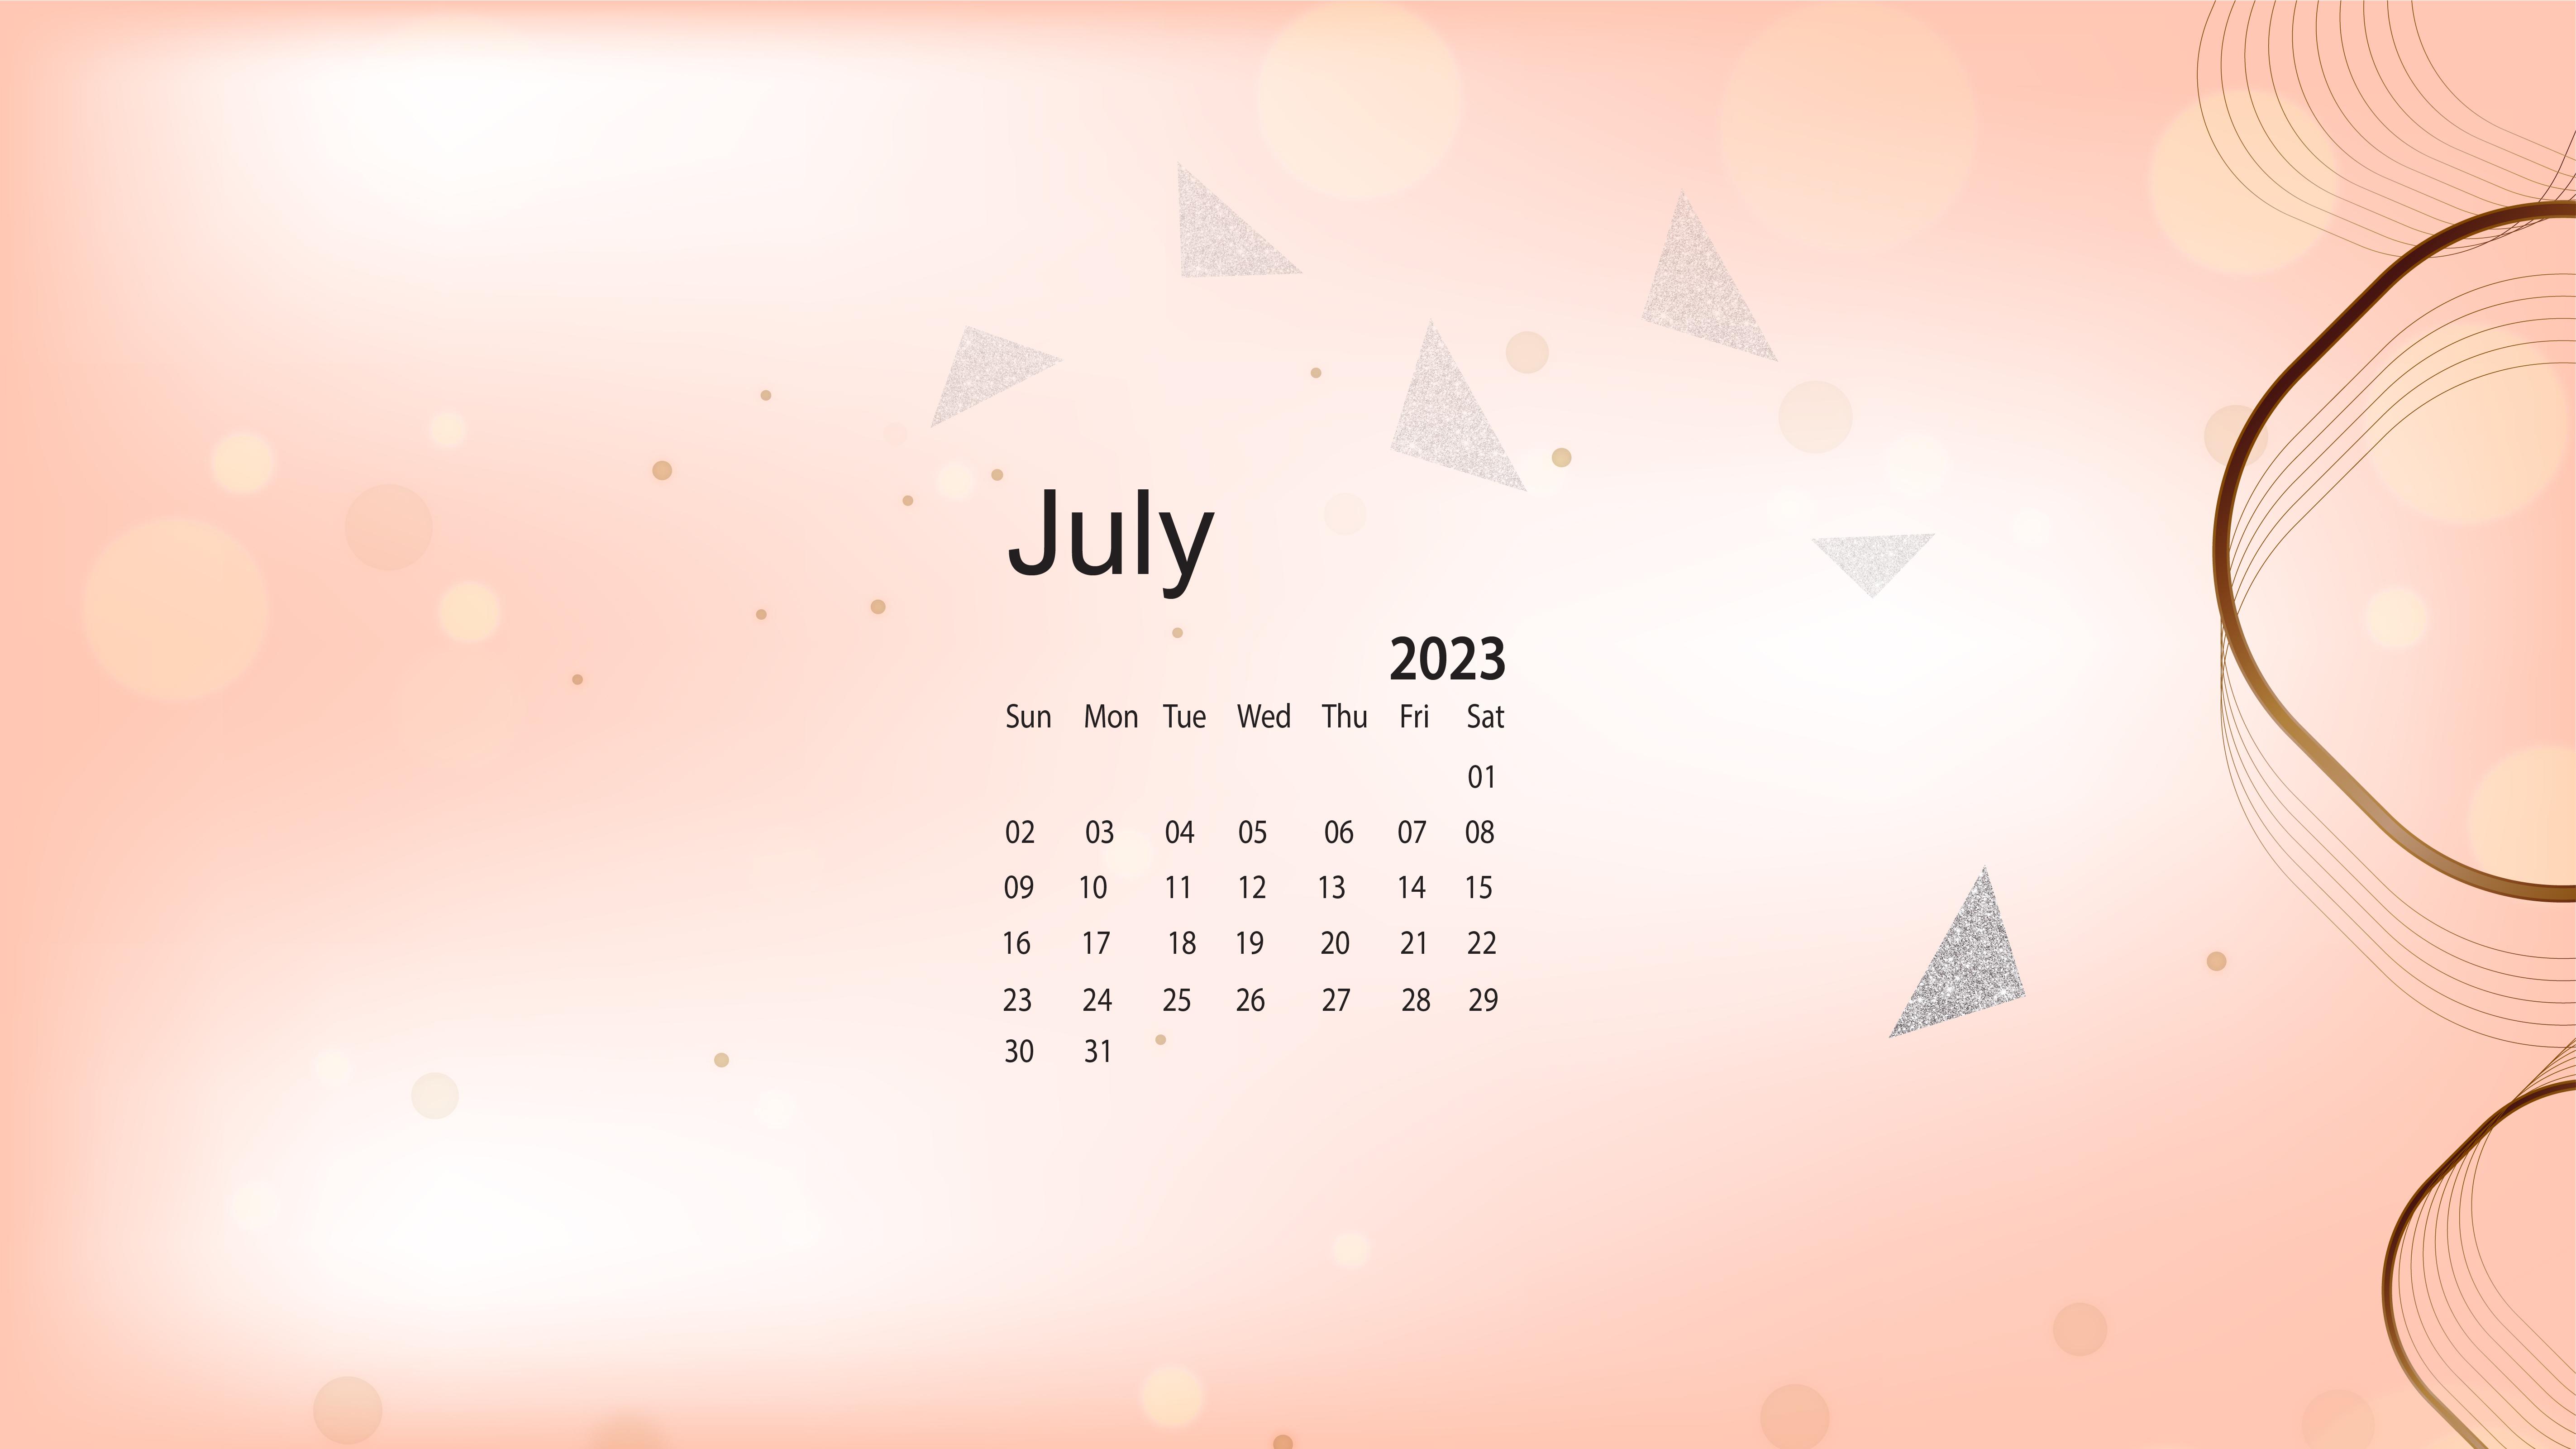 July 2023 Calendar Wallpapers Top Free July 2023 Calendar Backgrounds